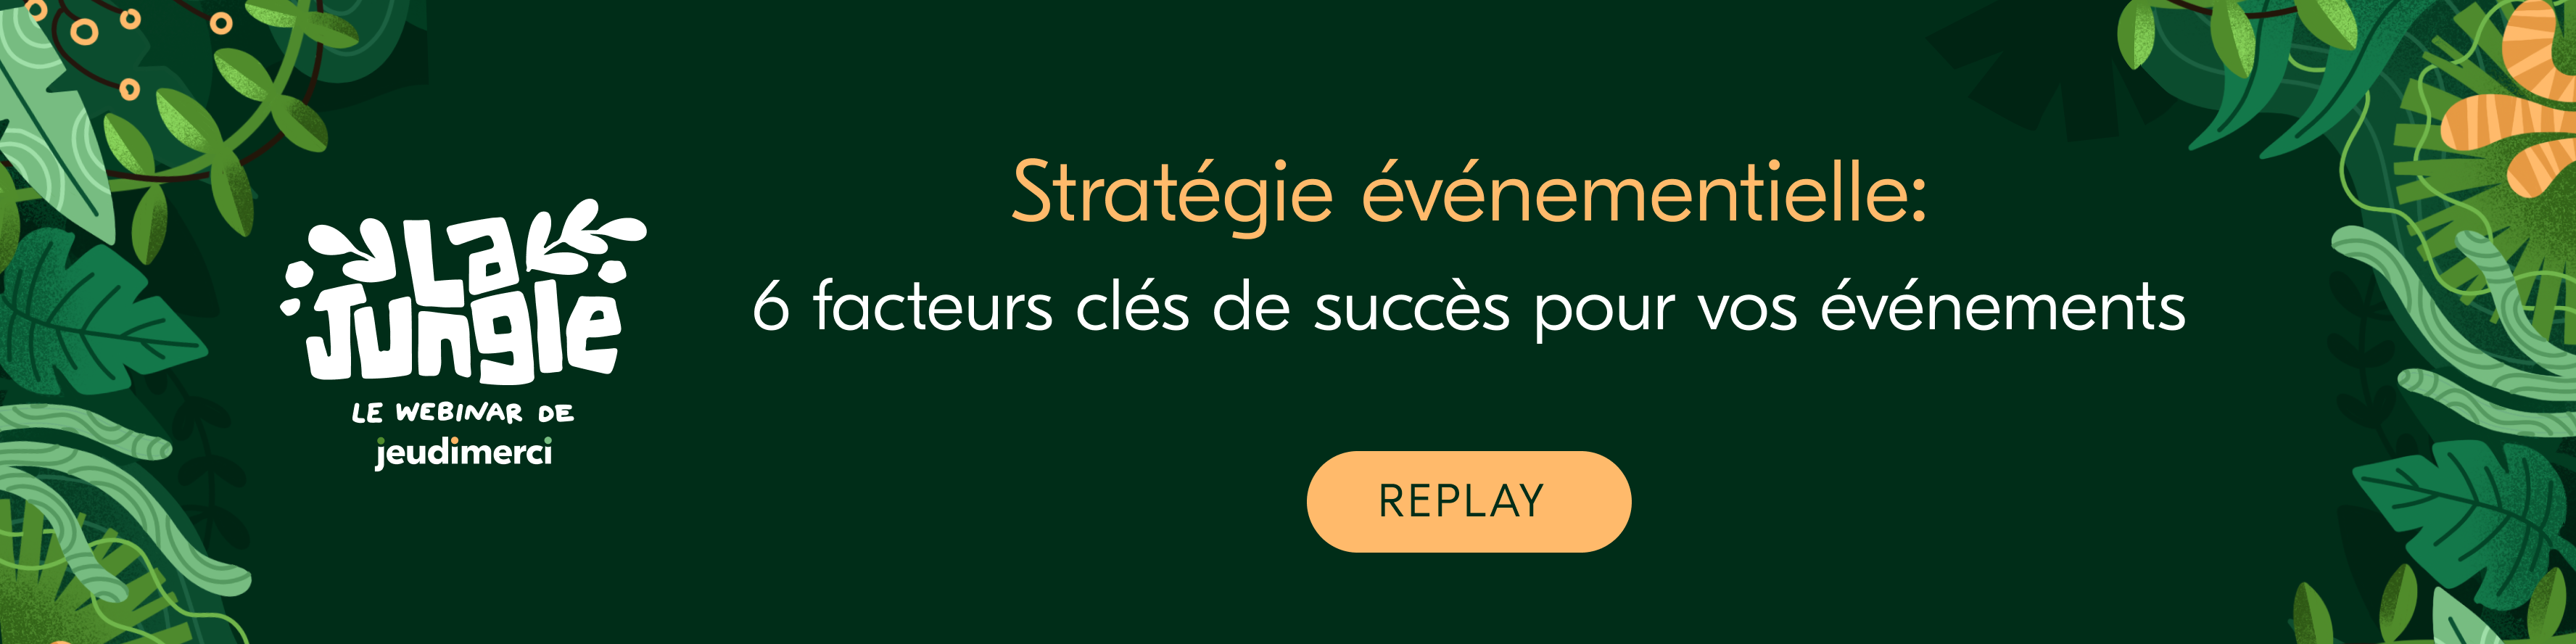 Replay webinar la Jungle stratégie événementiel